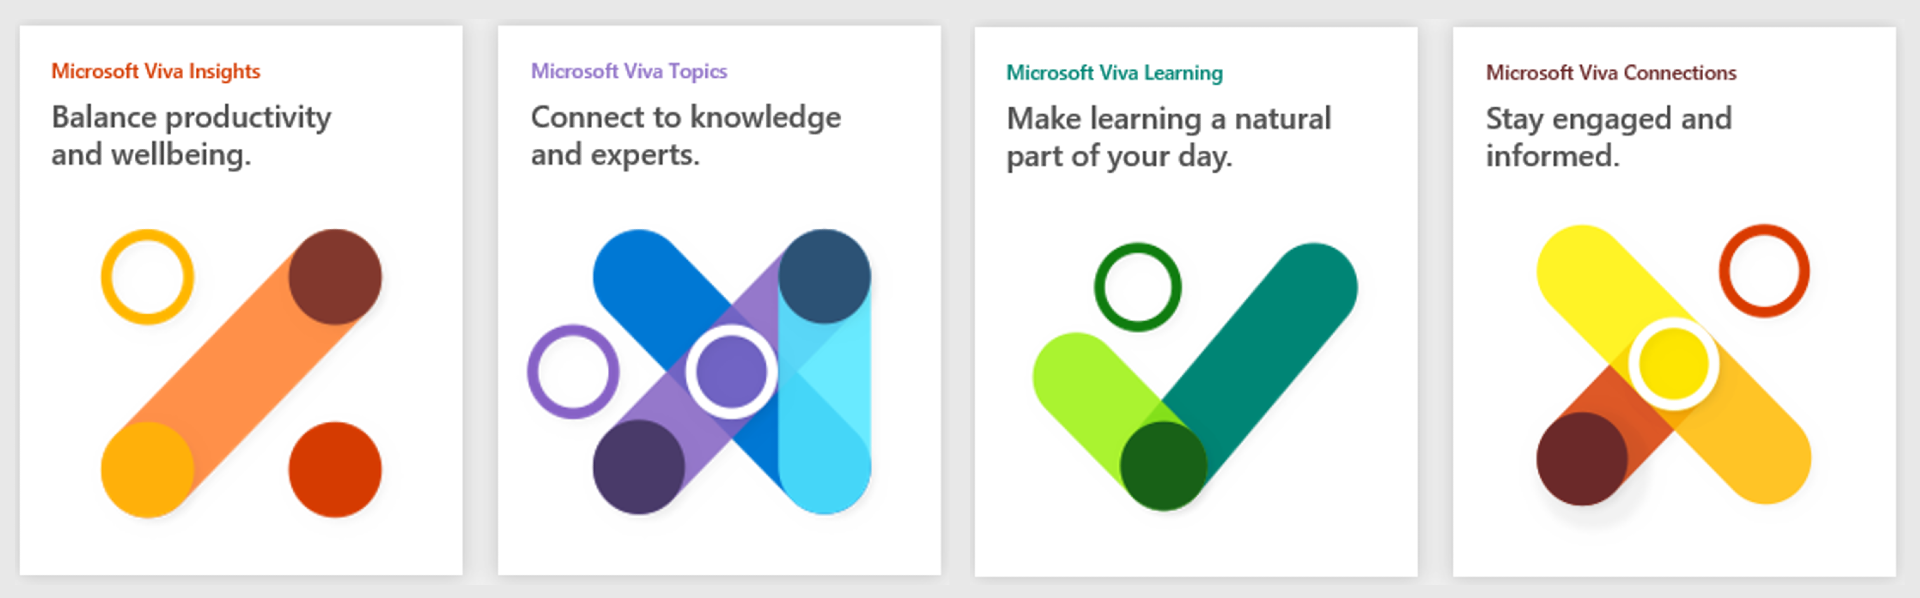 Introducing Microsoft Viva - Microsoft Community Hub